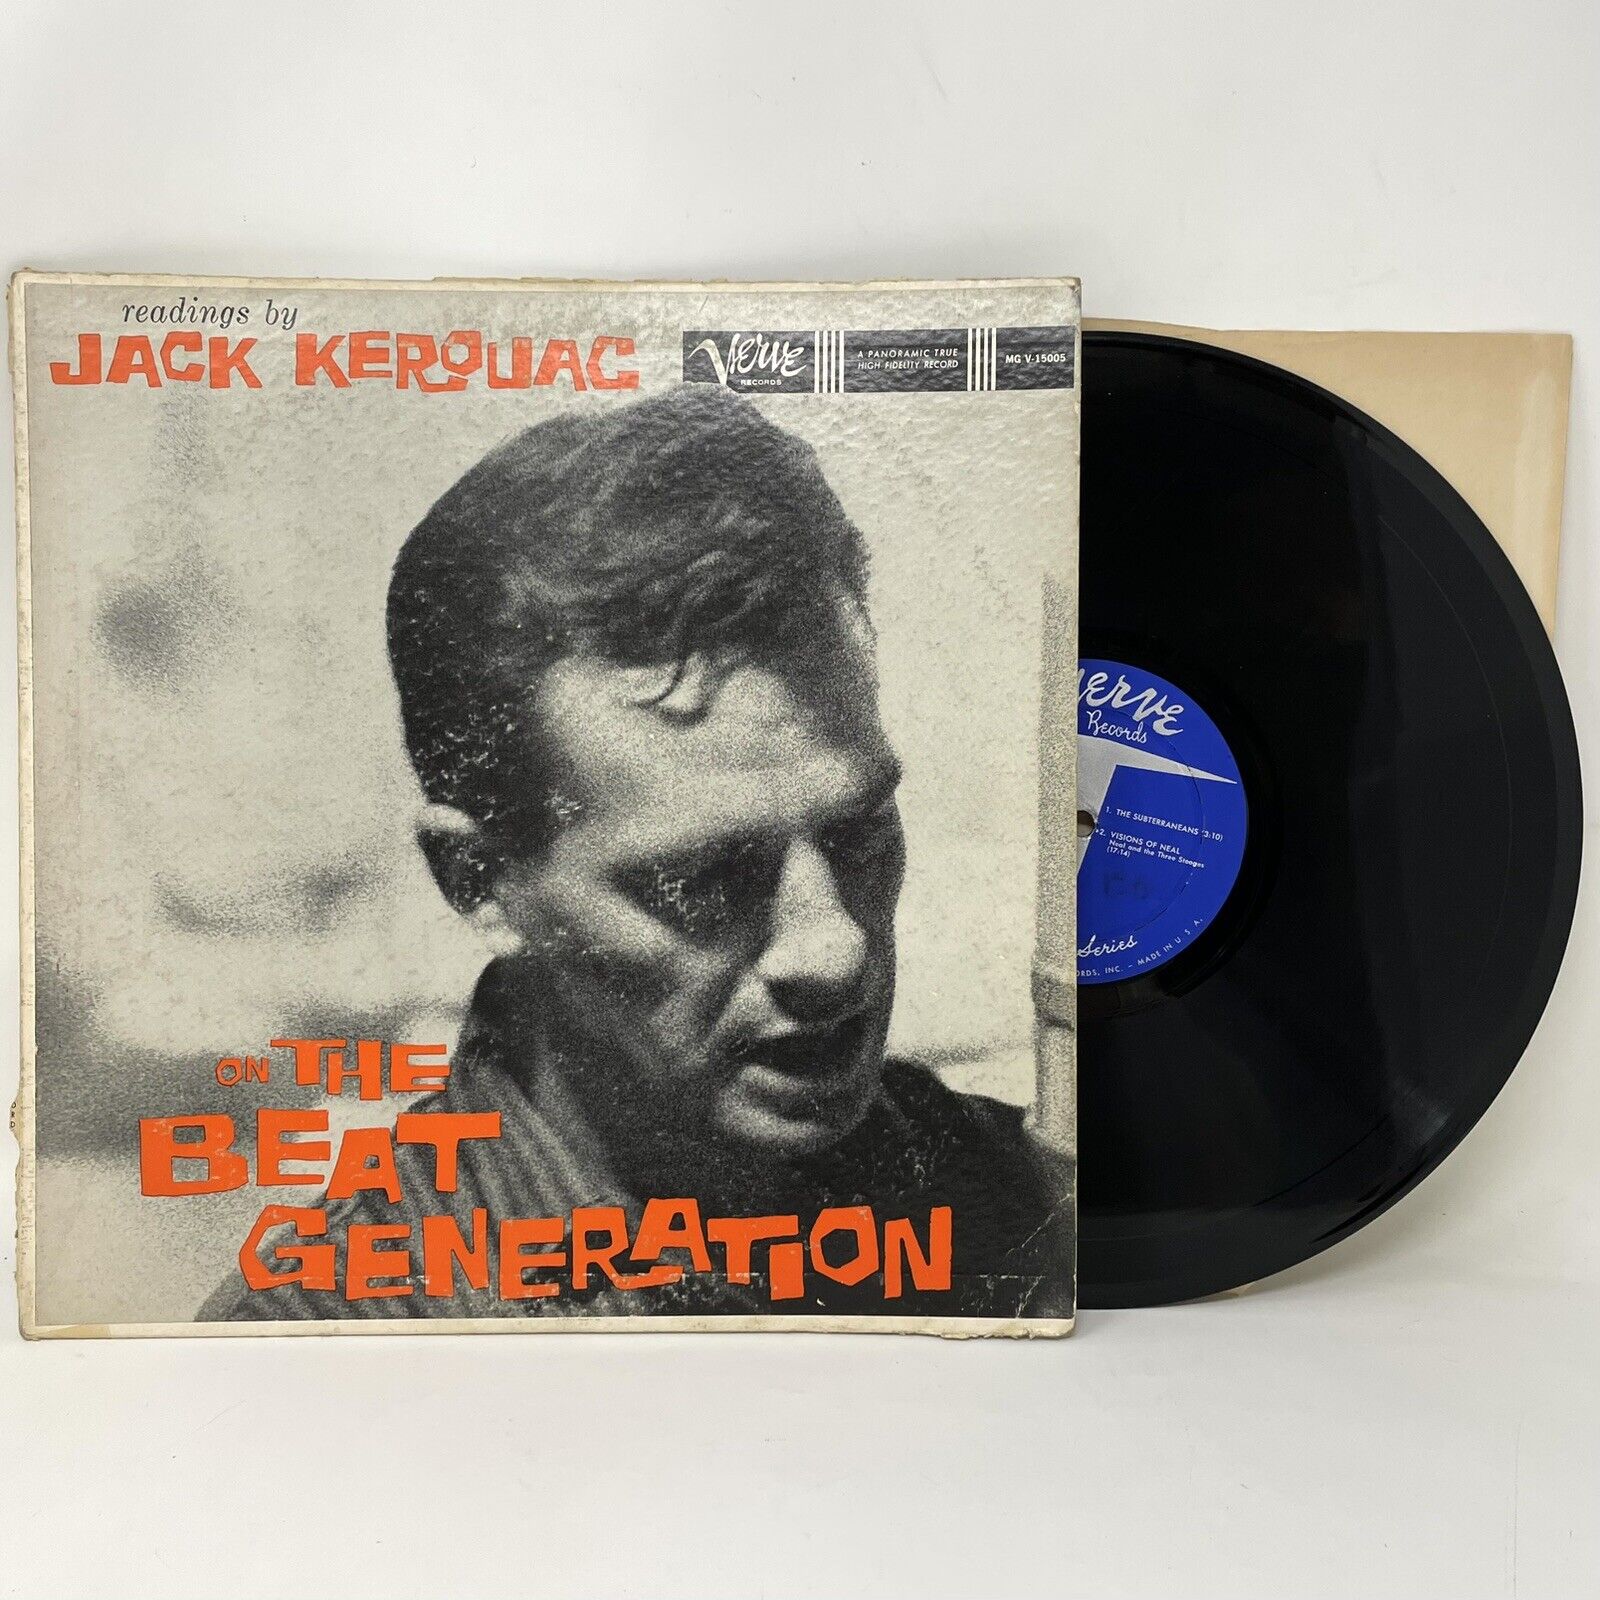 JACK KEROUAC ON THE BEAT GENERATION - VERVE MG V-15005 - ORIGINAL 1959 PRESS M24